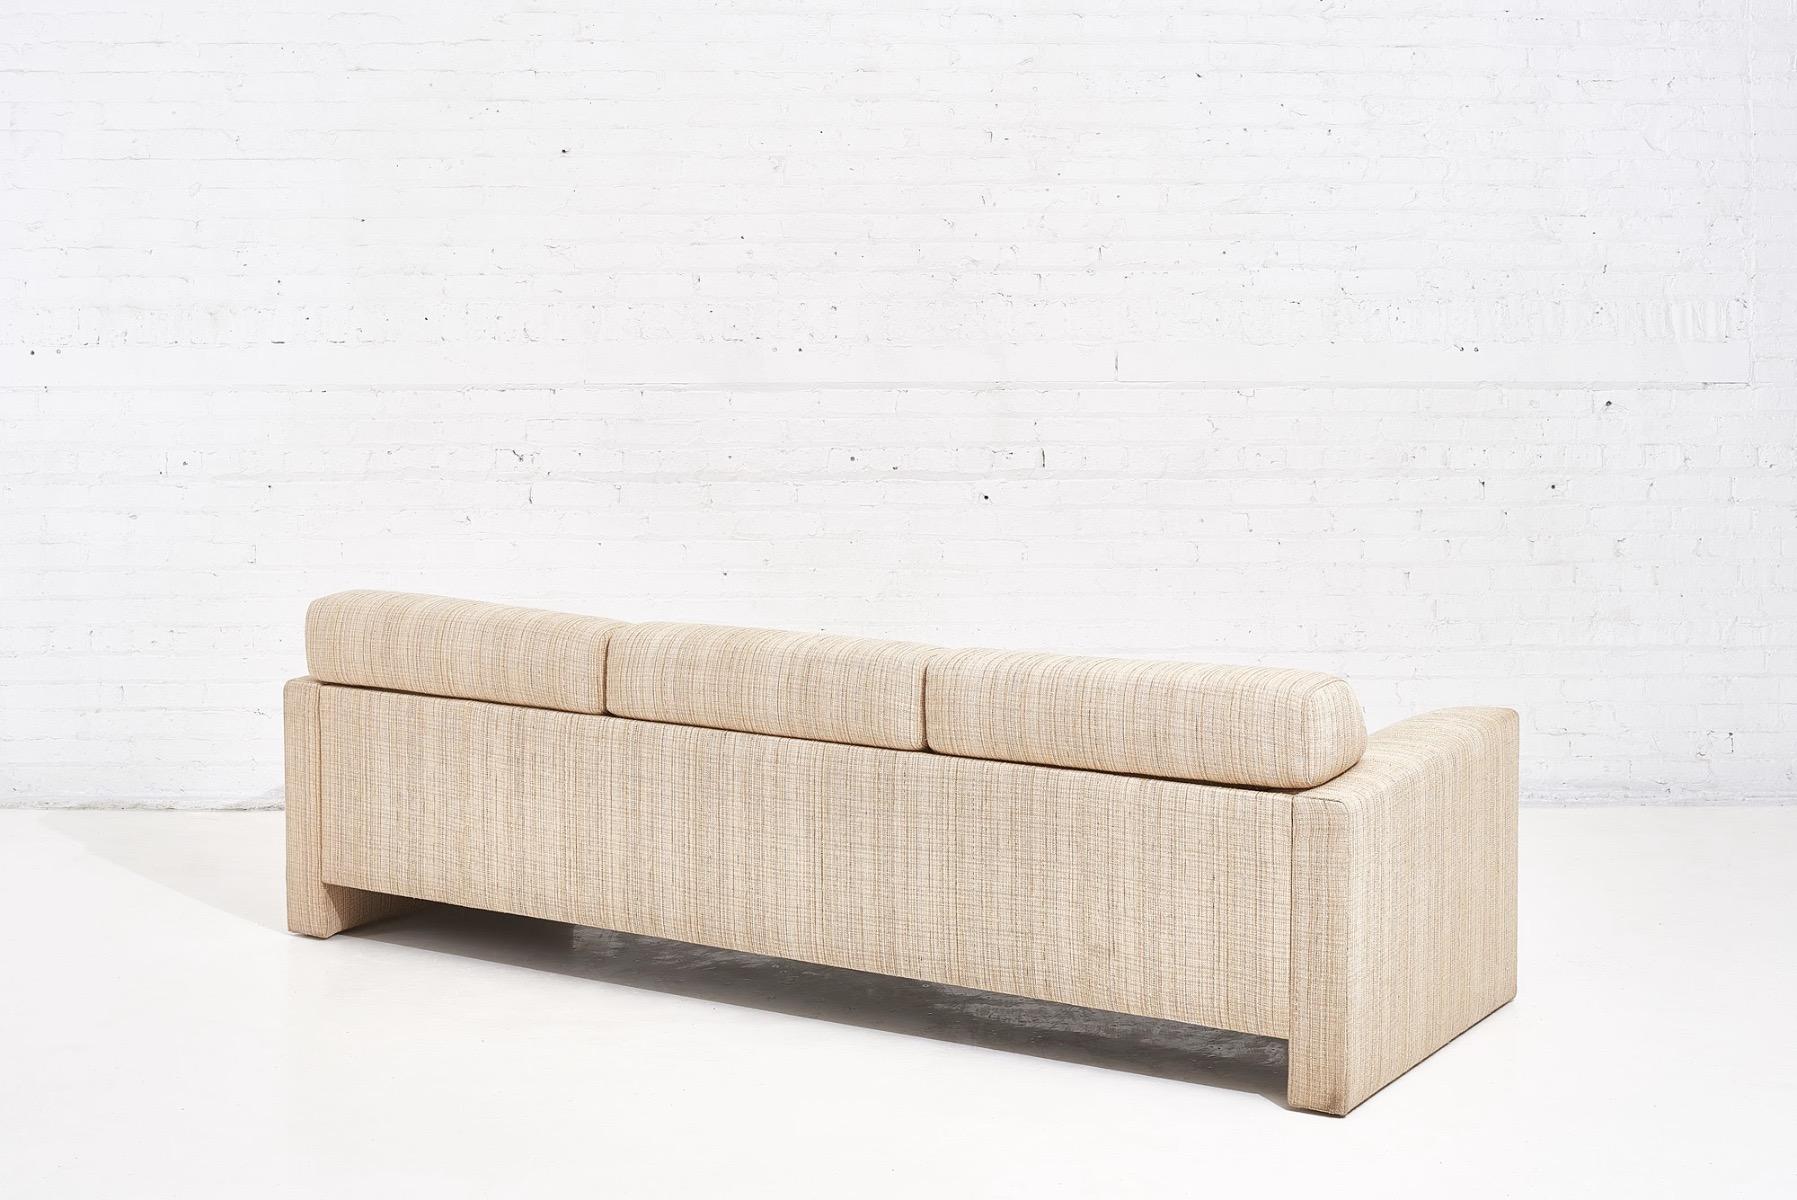 Brayton International Postmodern sofa, 1980’s. Original neutral tone woven upholstery in great condition.